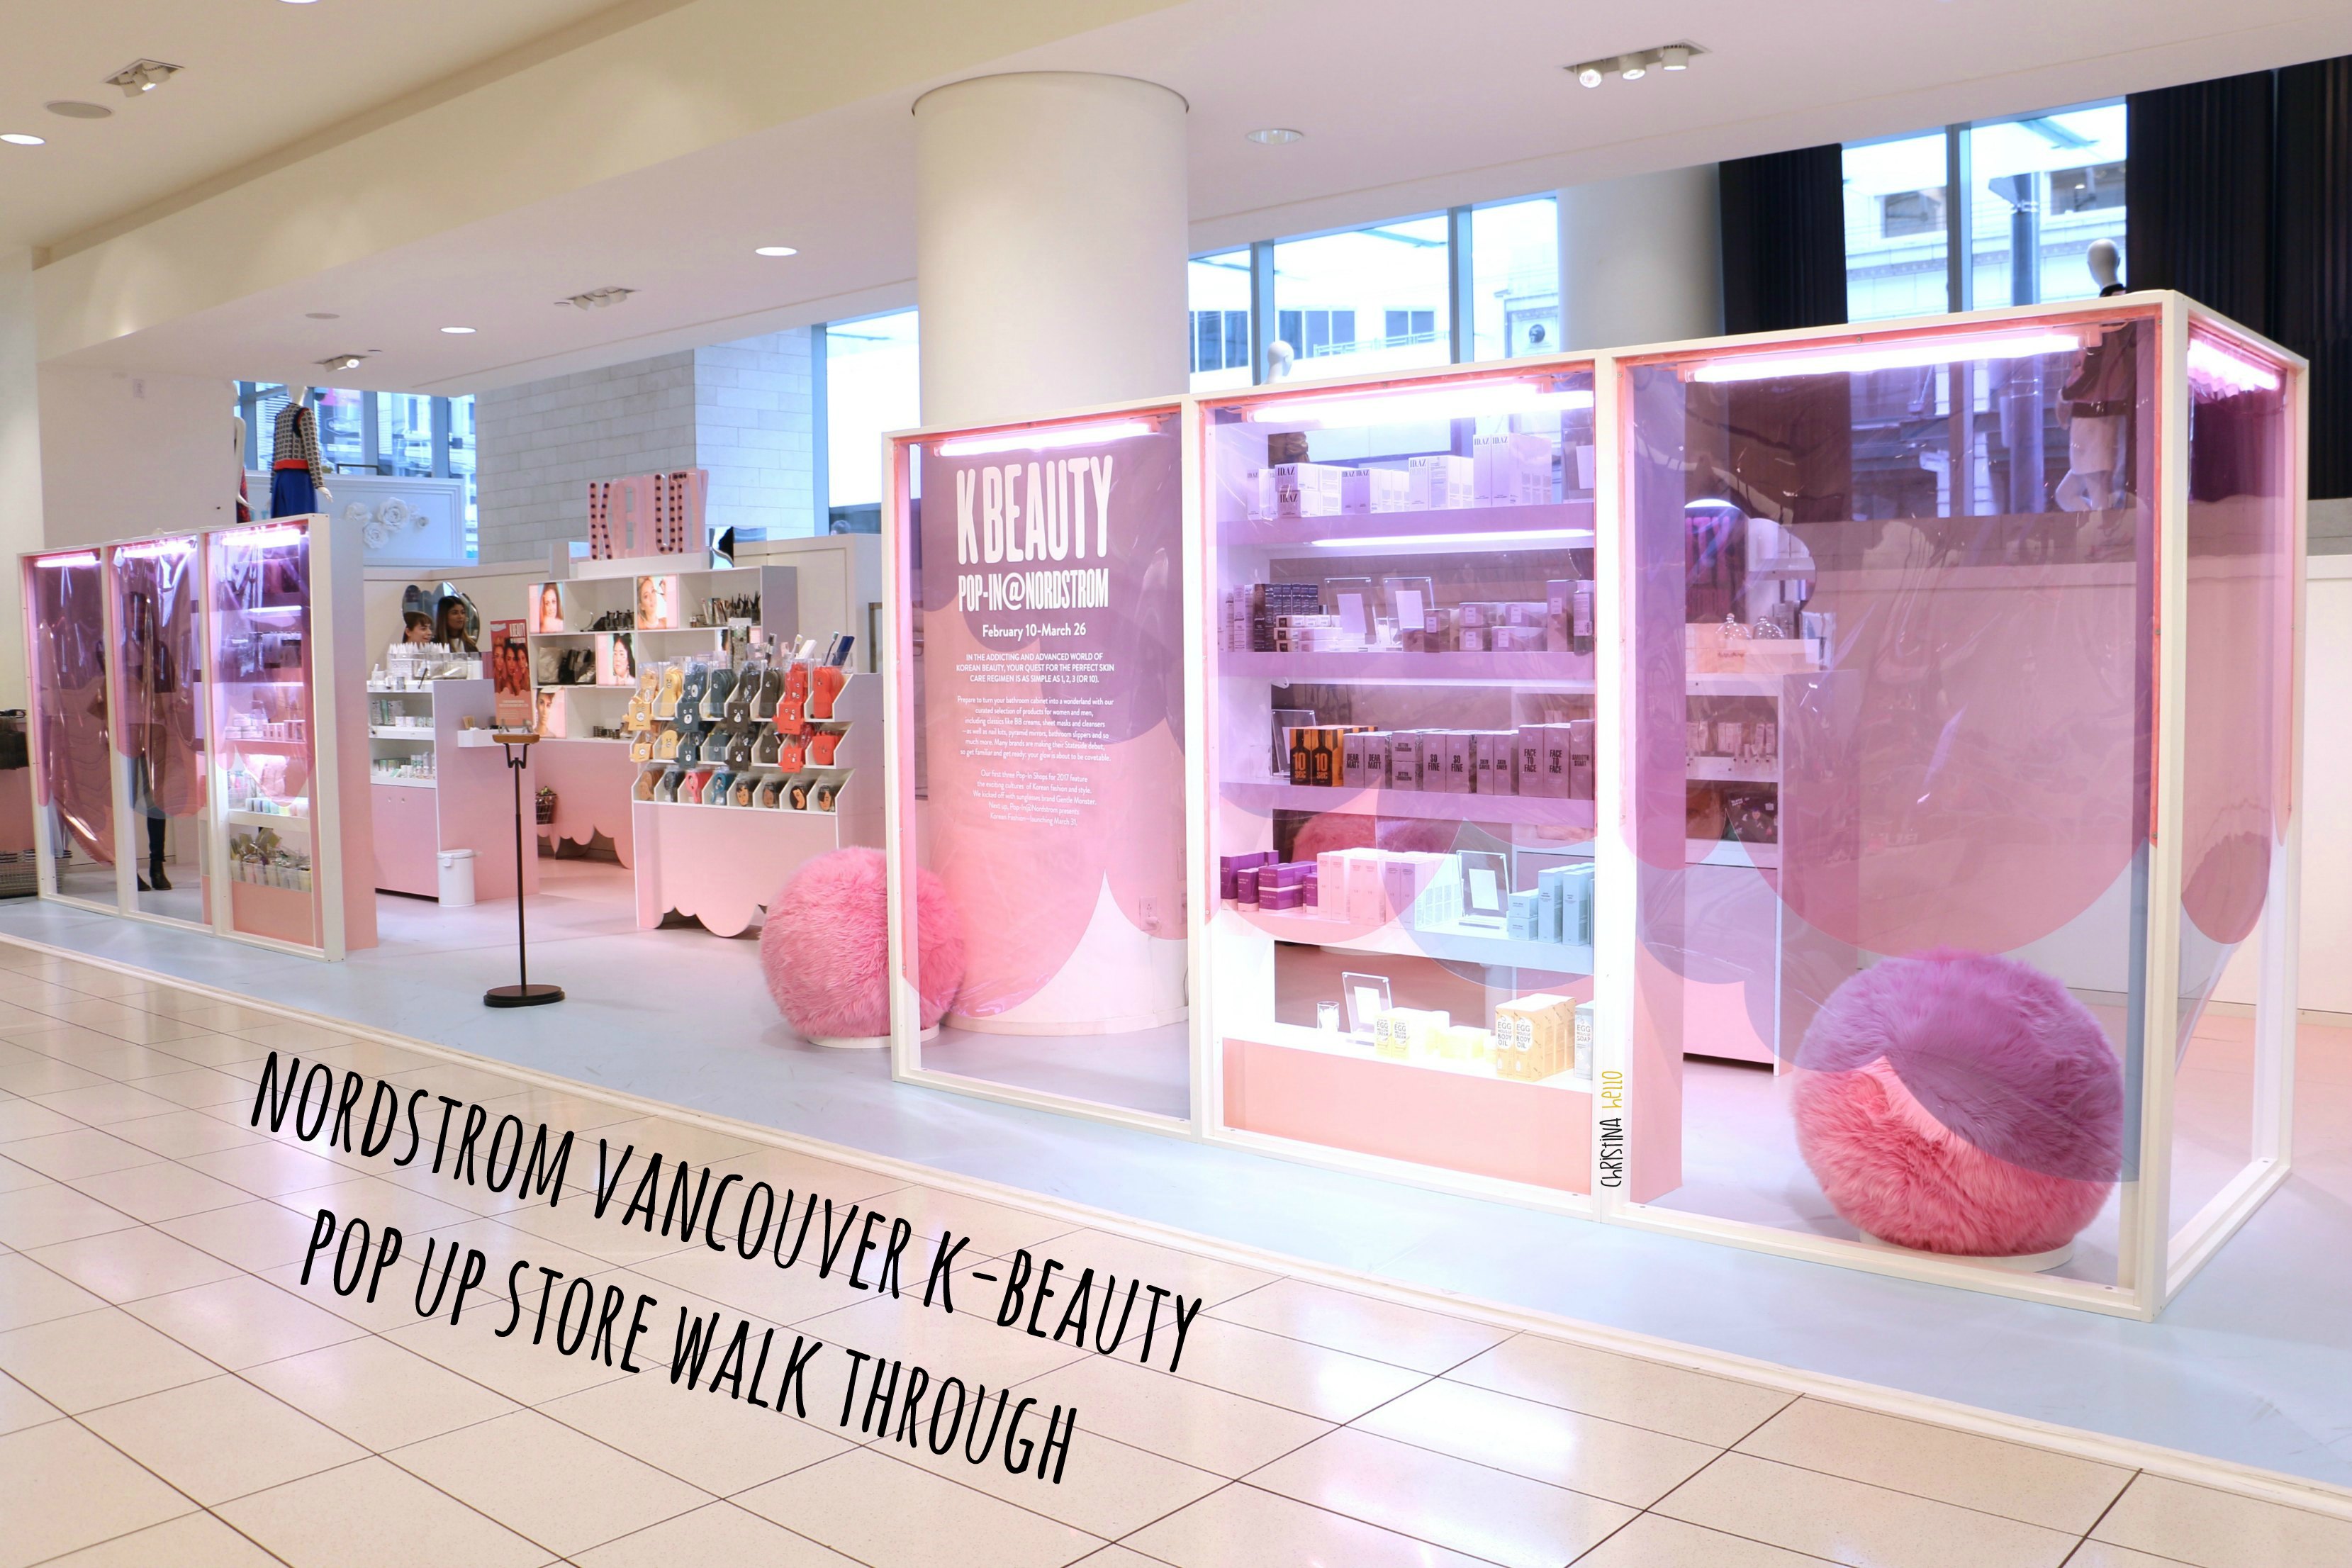 Nordstrom Vancouver K-beauty Pop up store walk through - Christinahello